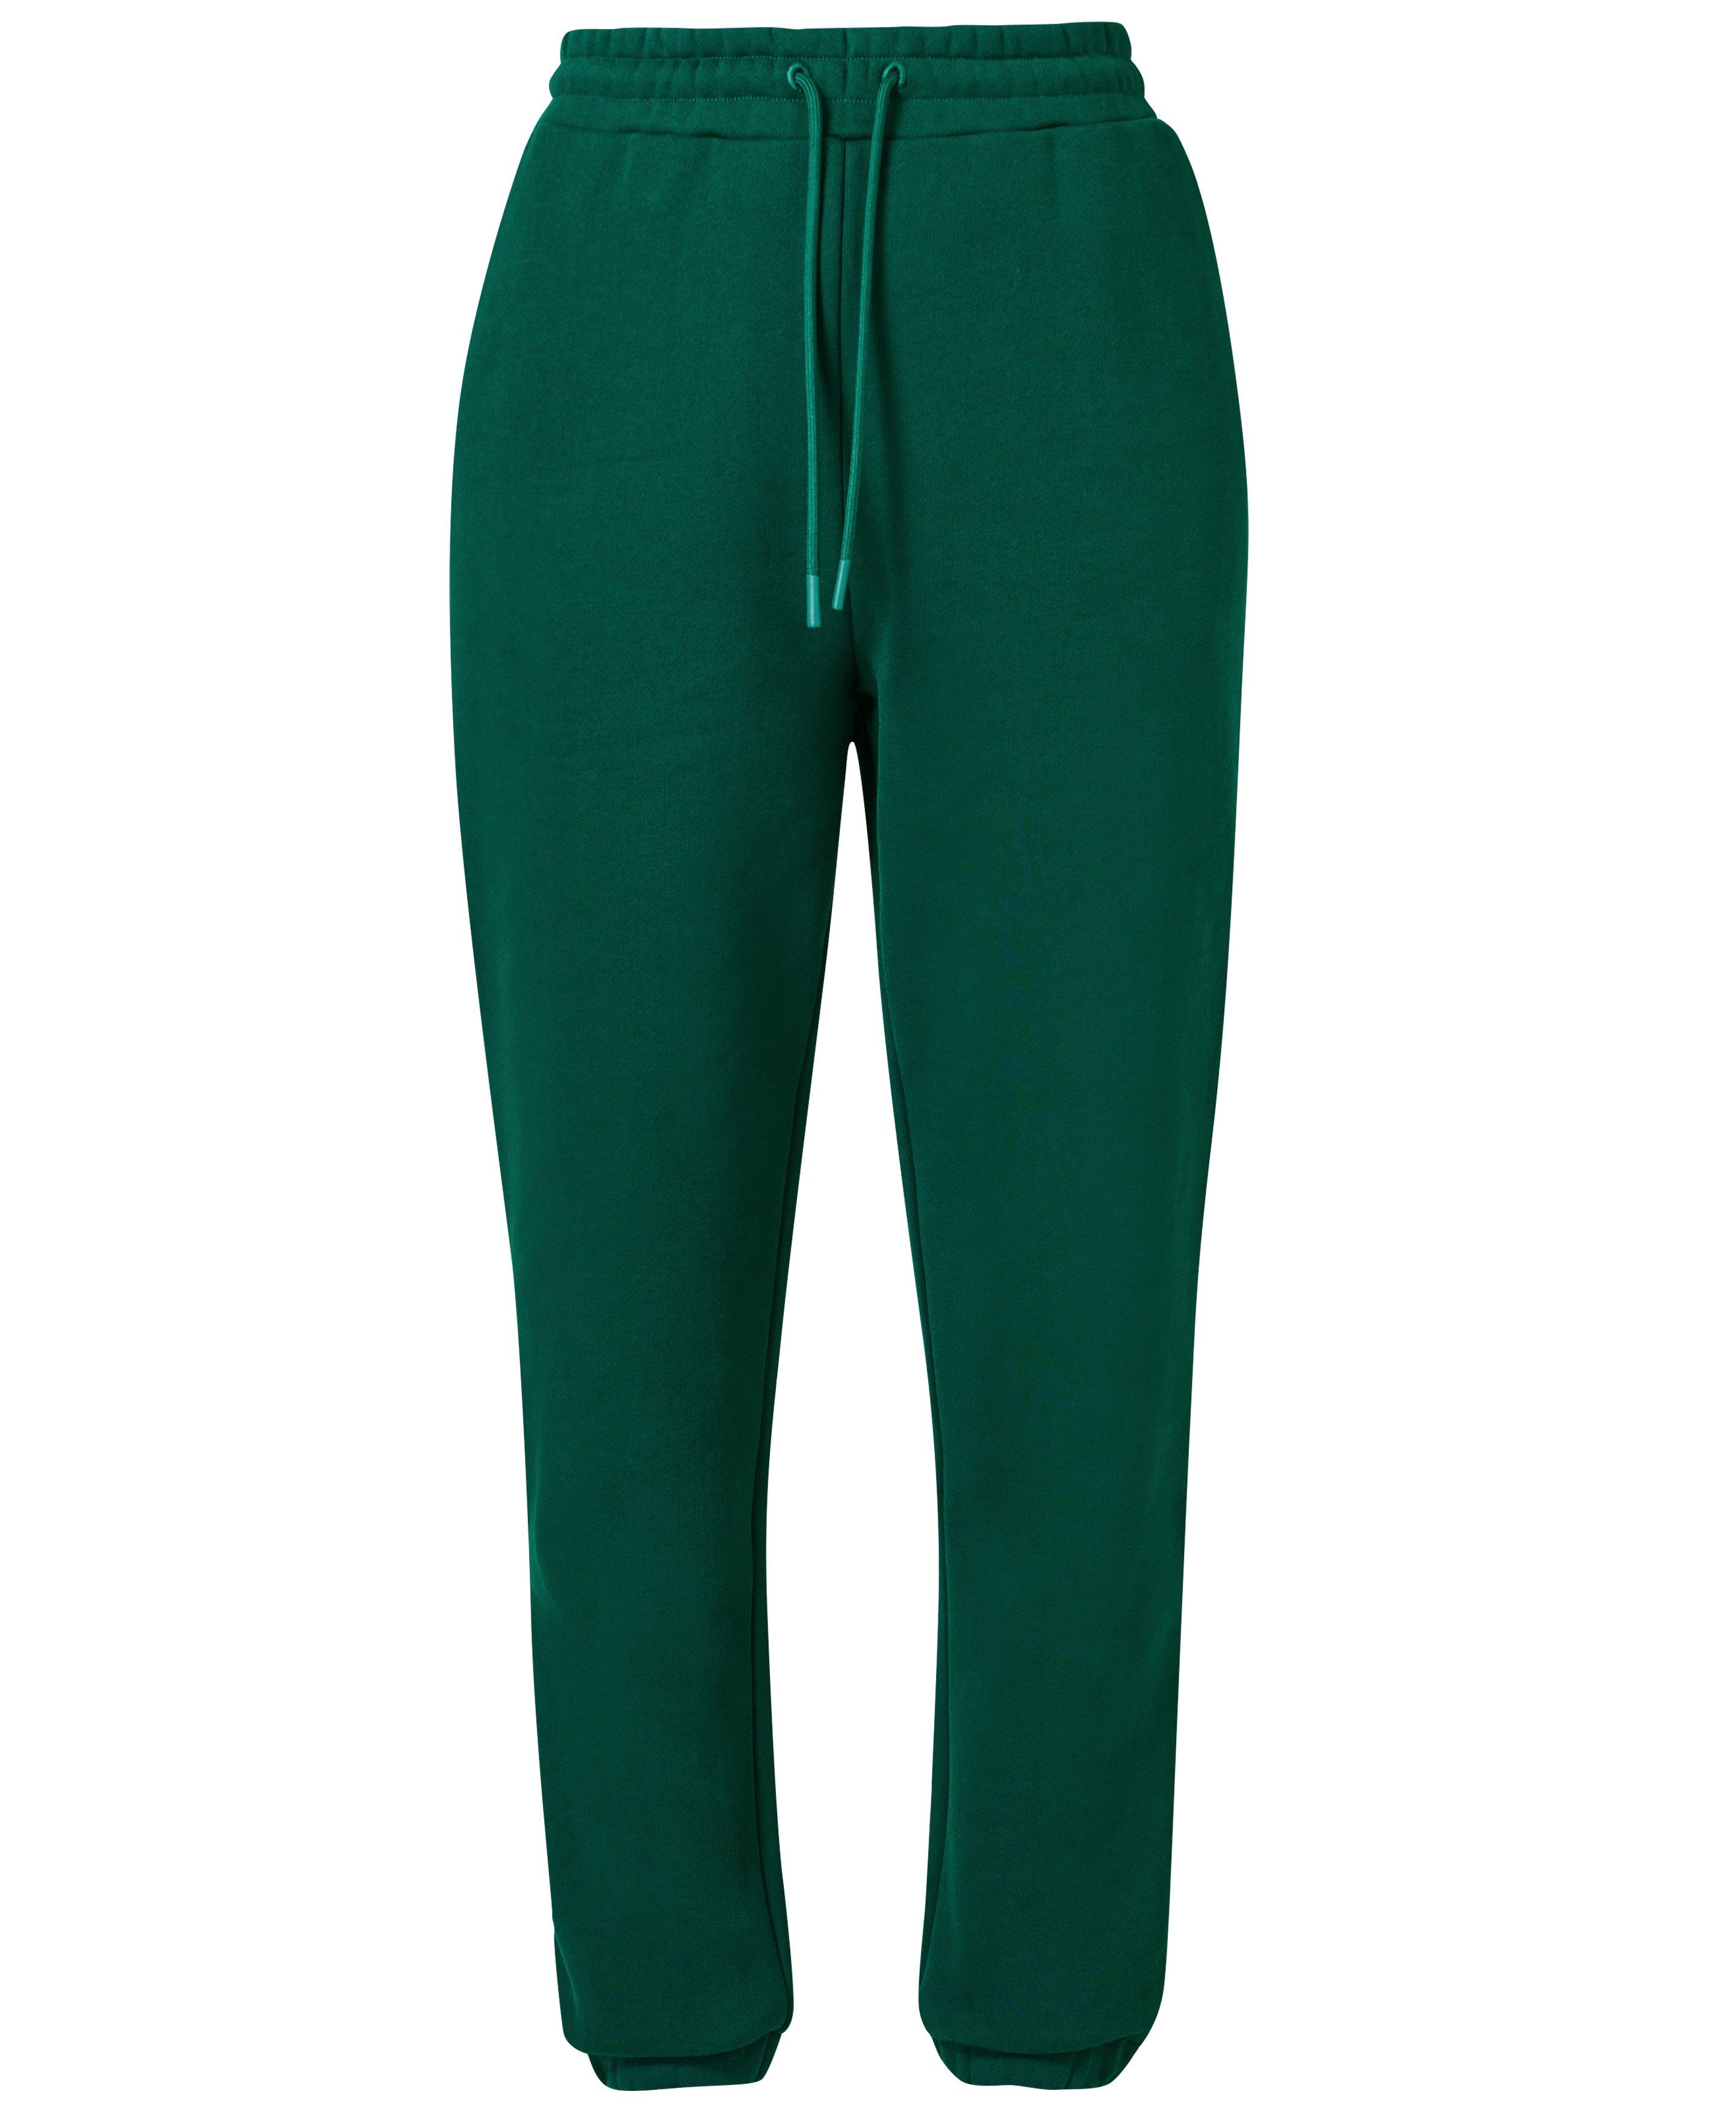 Powerhouse Jogger - Retro Green  Women's Trousers & Yoga Pants